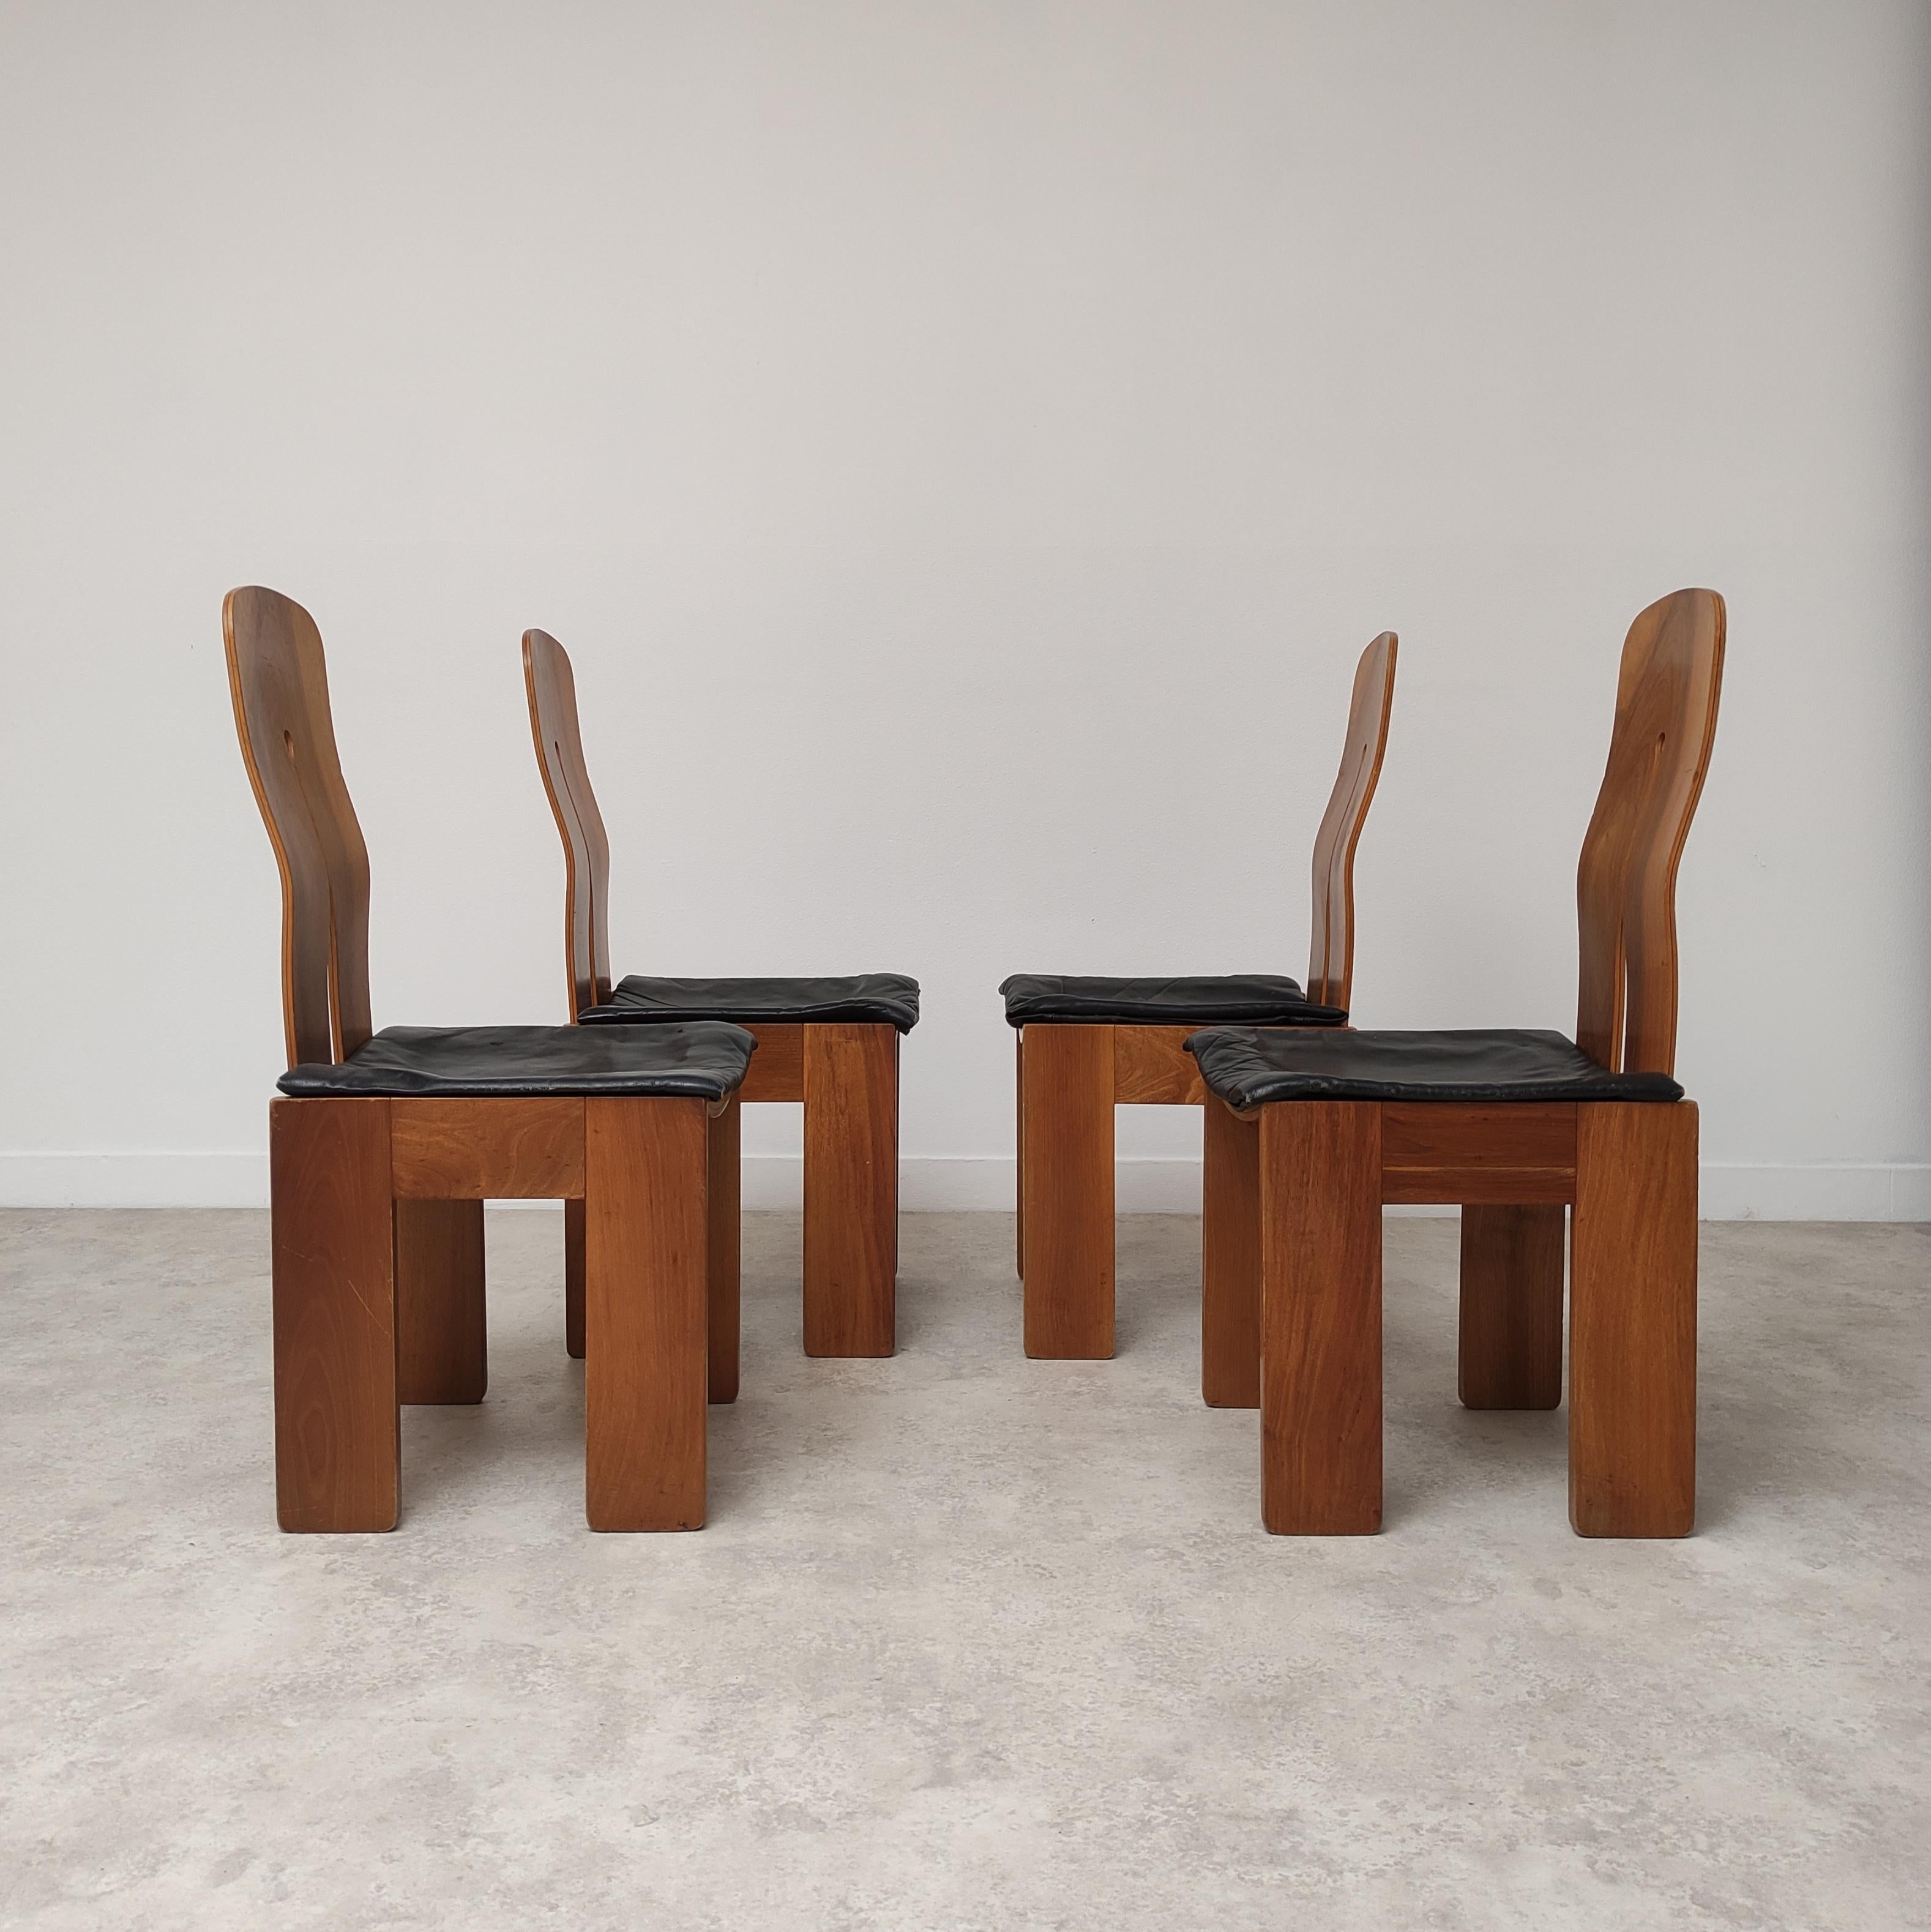 Brutalist Set of 4 chairs Carlo Scarpa, Bernini mod. 1934-765 For Sale